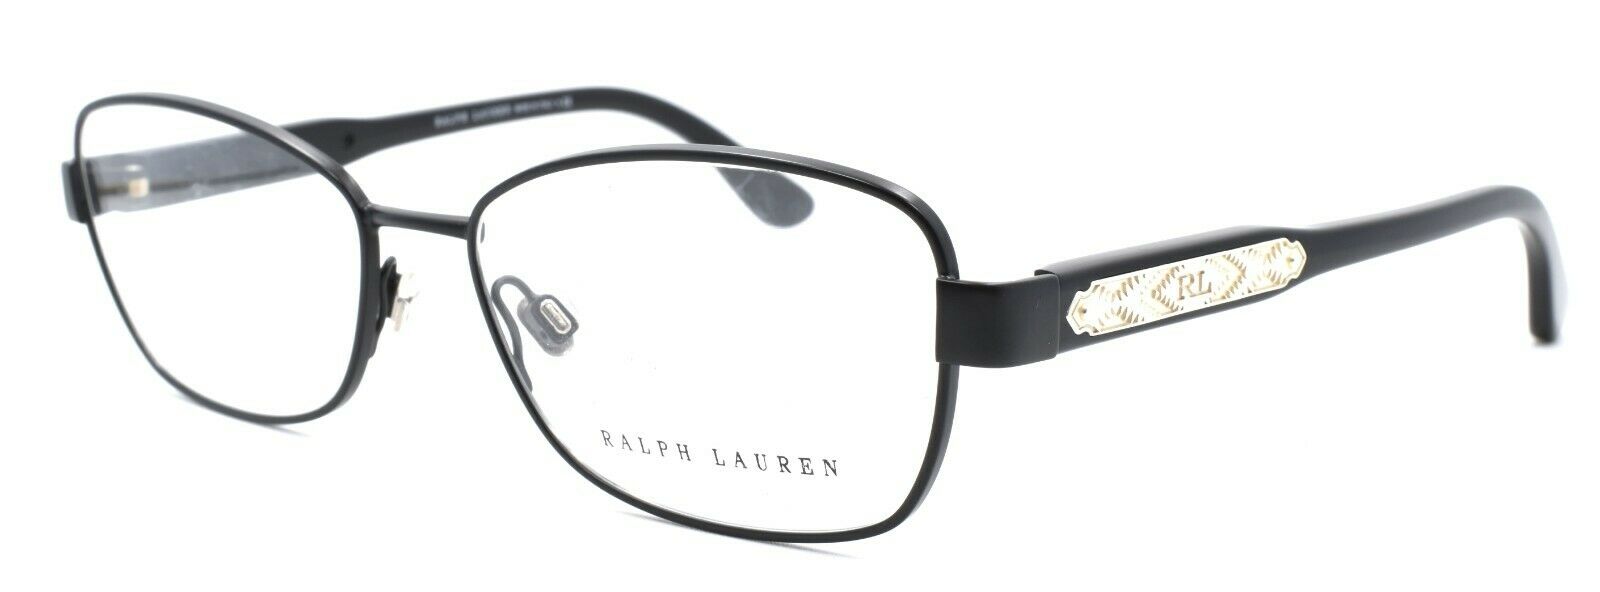 1-Ralph Lauren RL5088 9038 Women's Eyeglasses Frames 51-15-140 Matte Black ITALY-8053672232400-IKSpecs